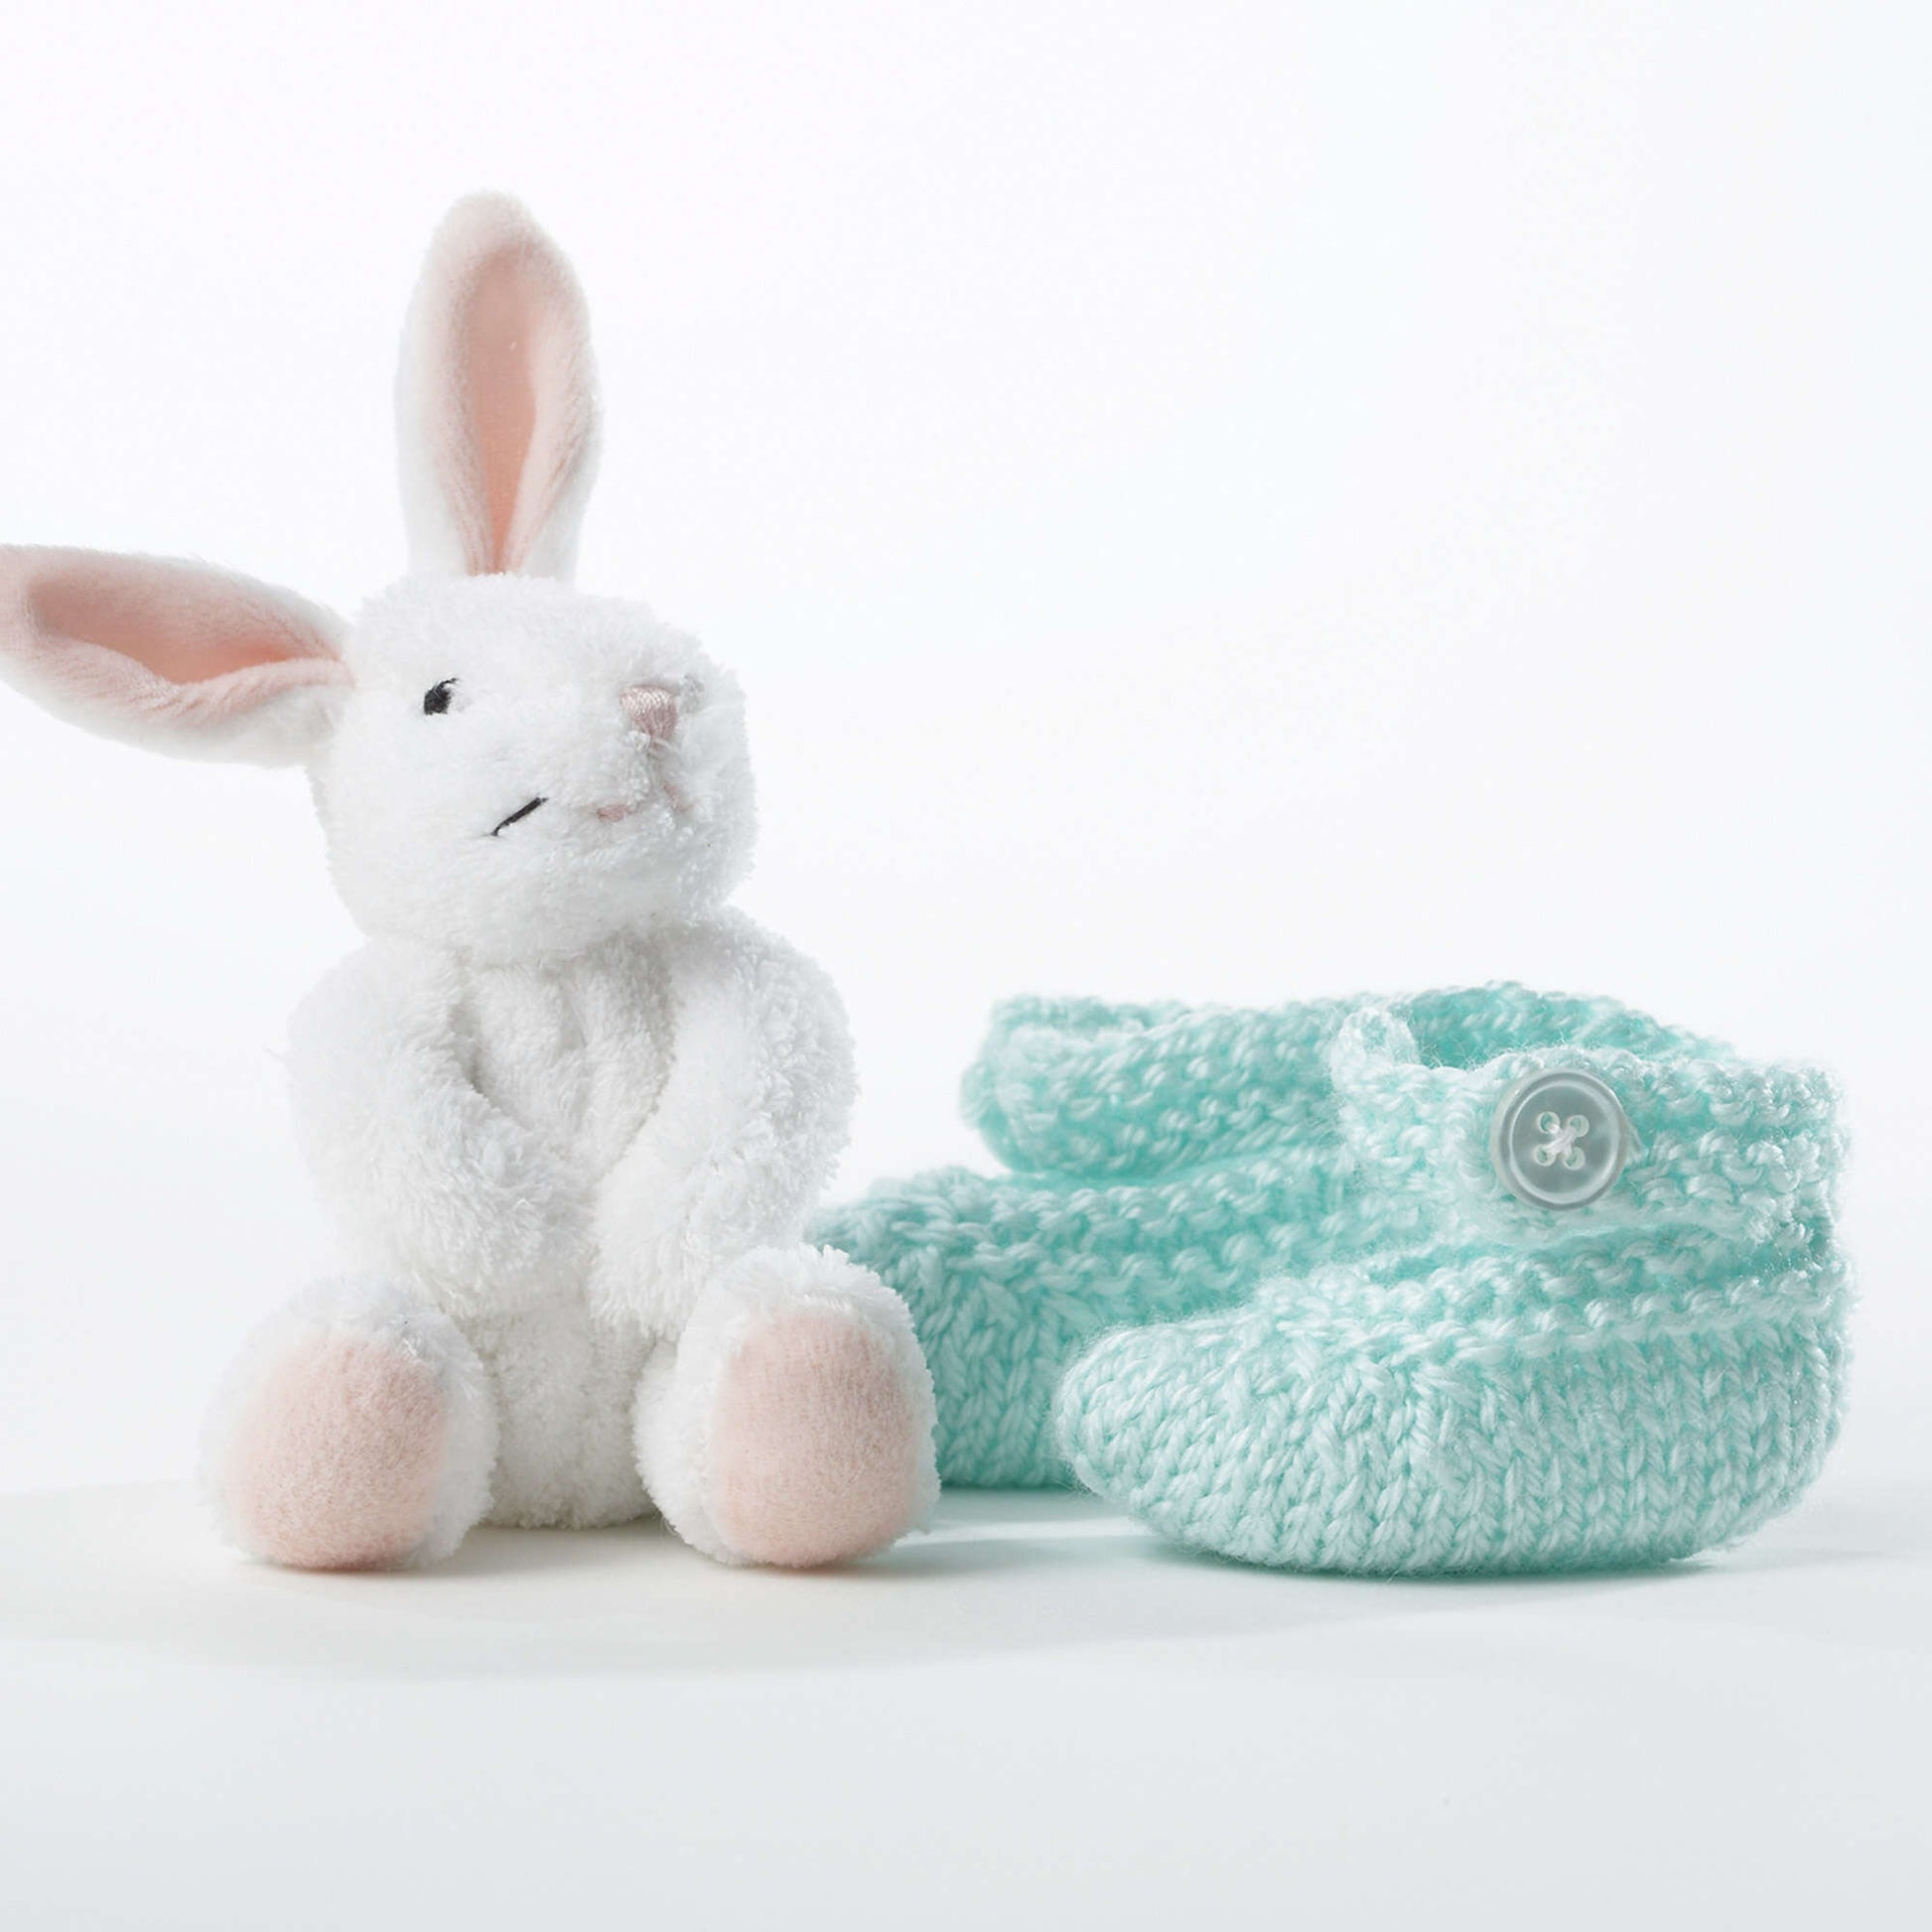 Free Bernat Knit Baby Booties Pattern